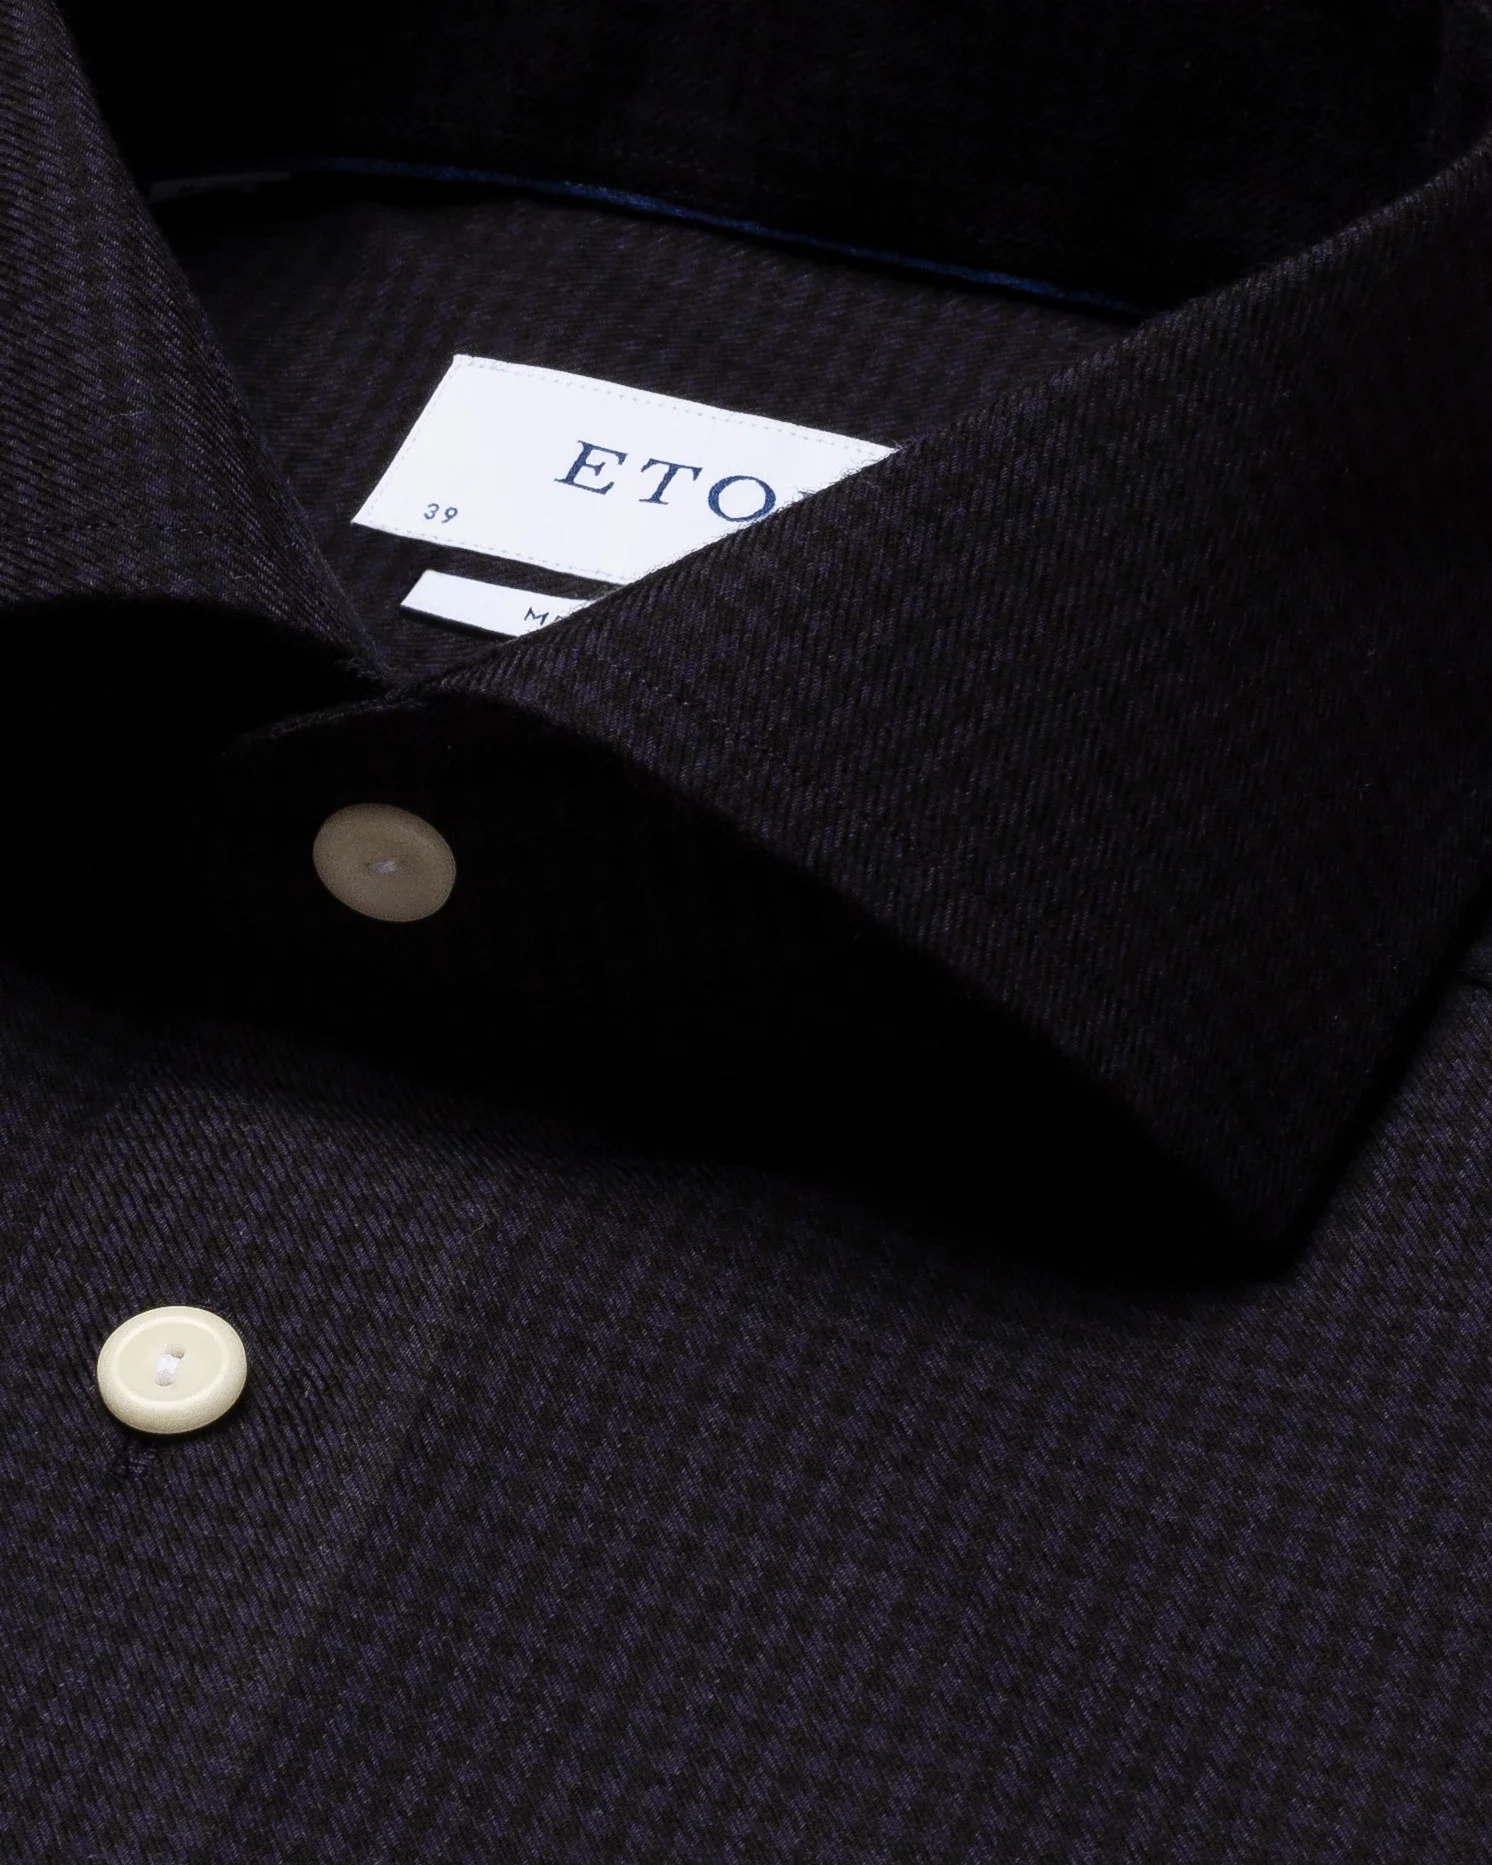 Eton - black brushed merino wool shirt wide spread single rounded slim